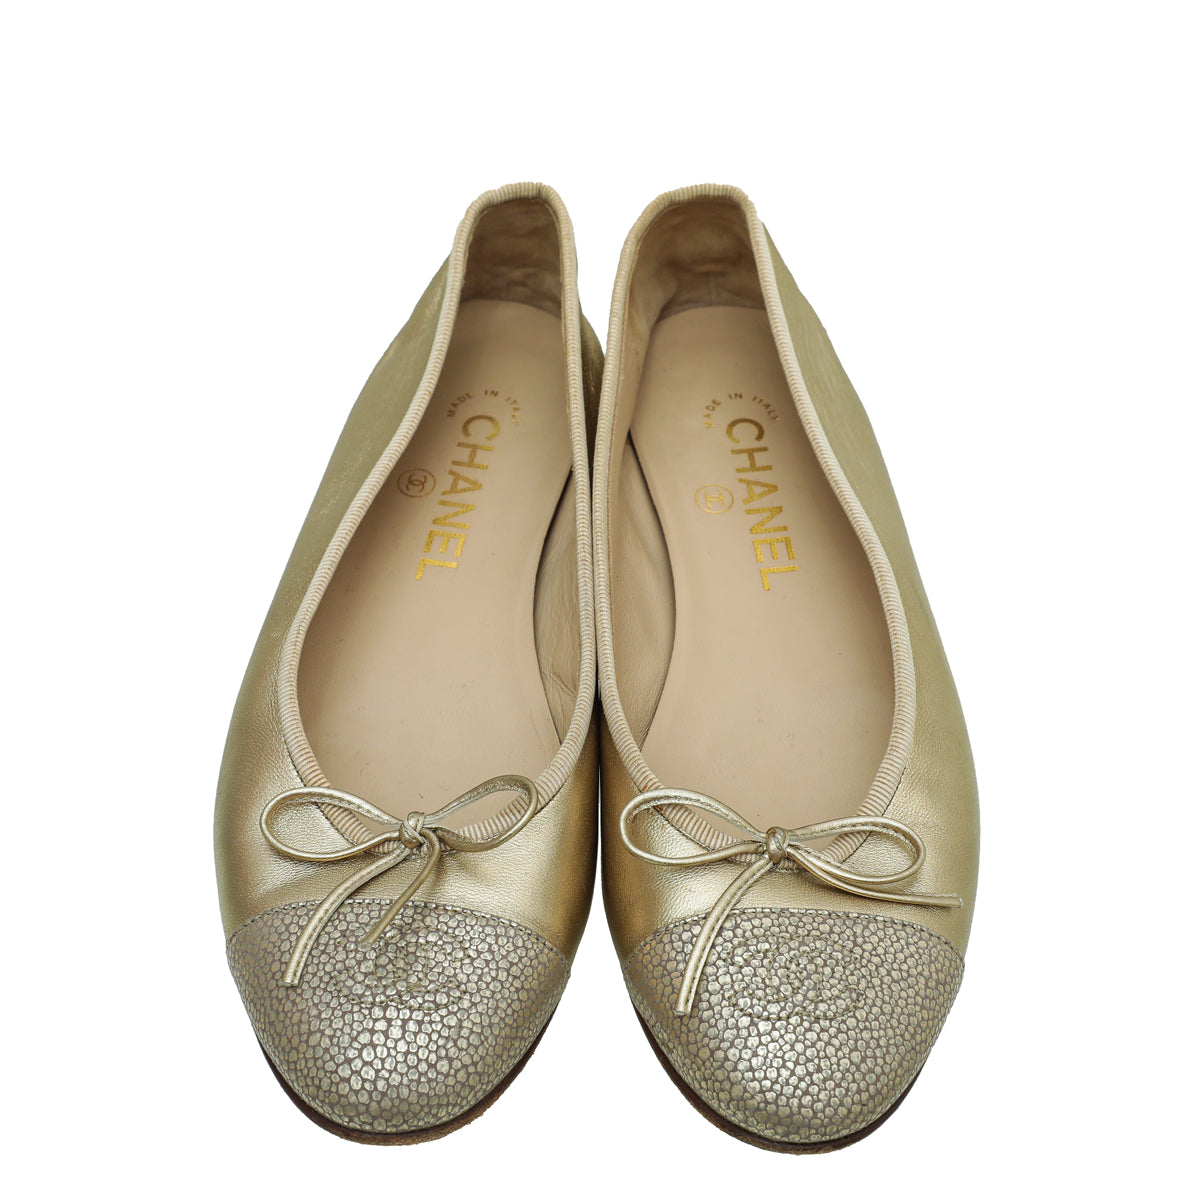 Chanel Ballet Flats Light Gold Beige Patent Leather 355 US 6  eBay